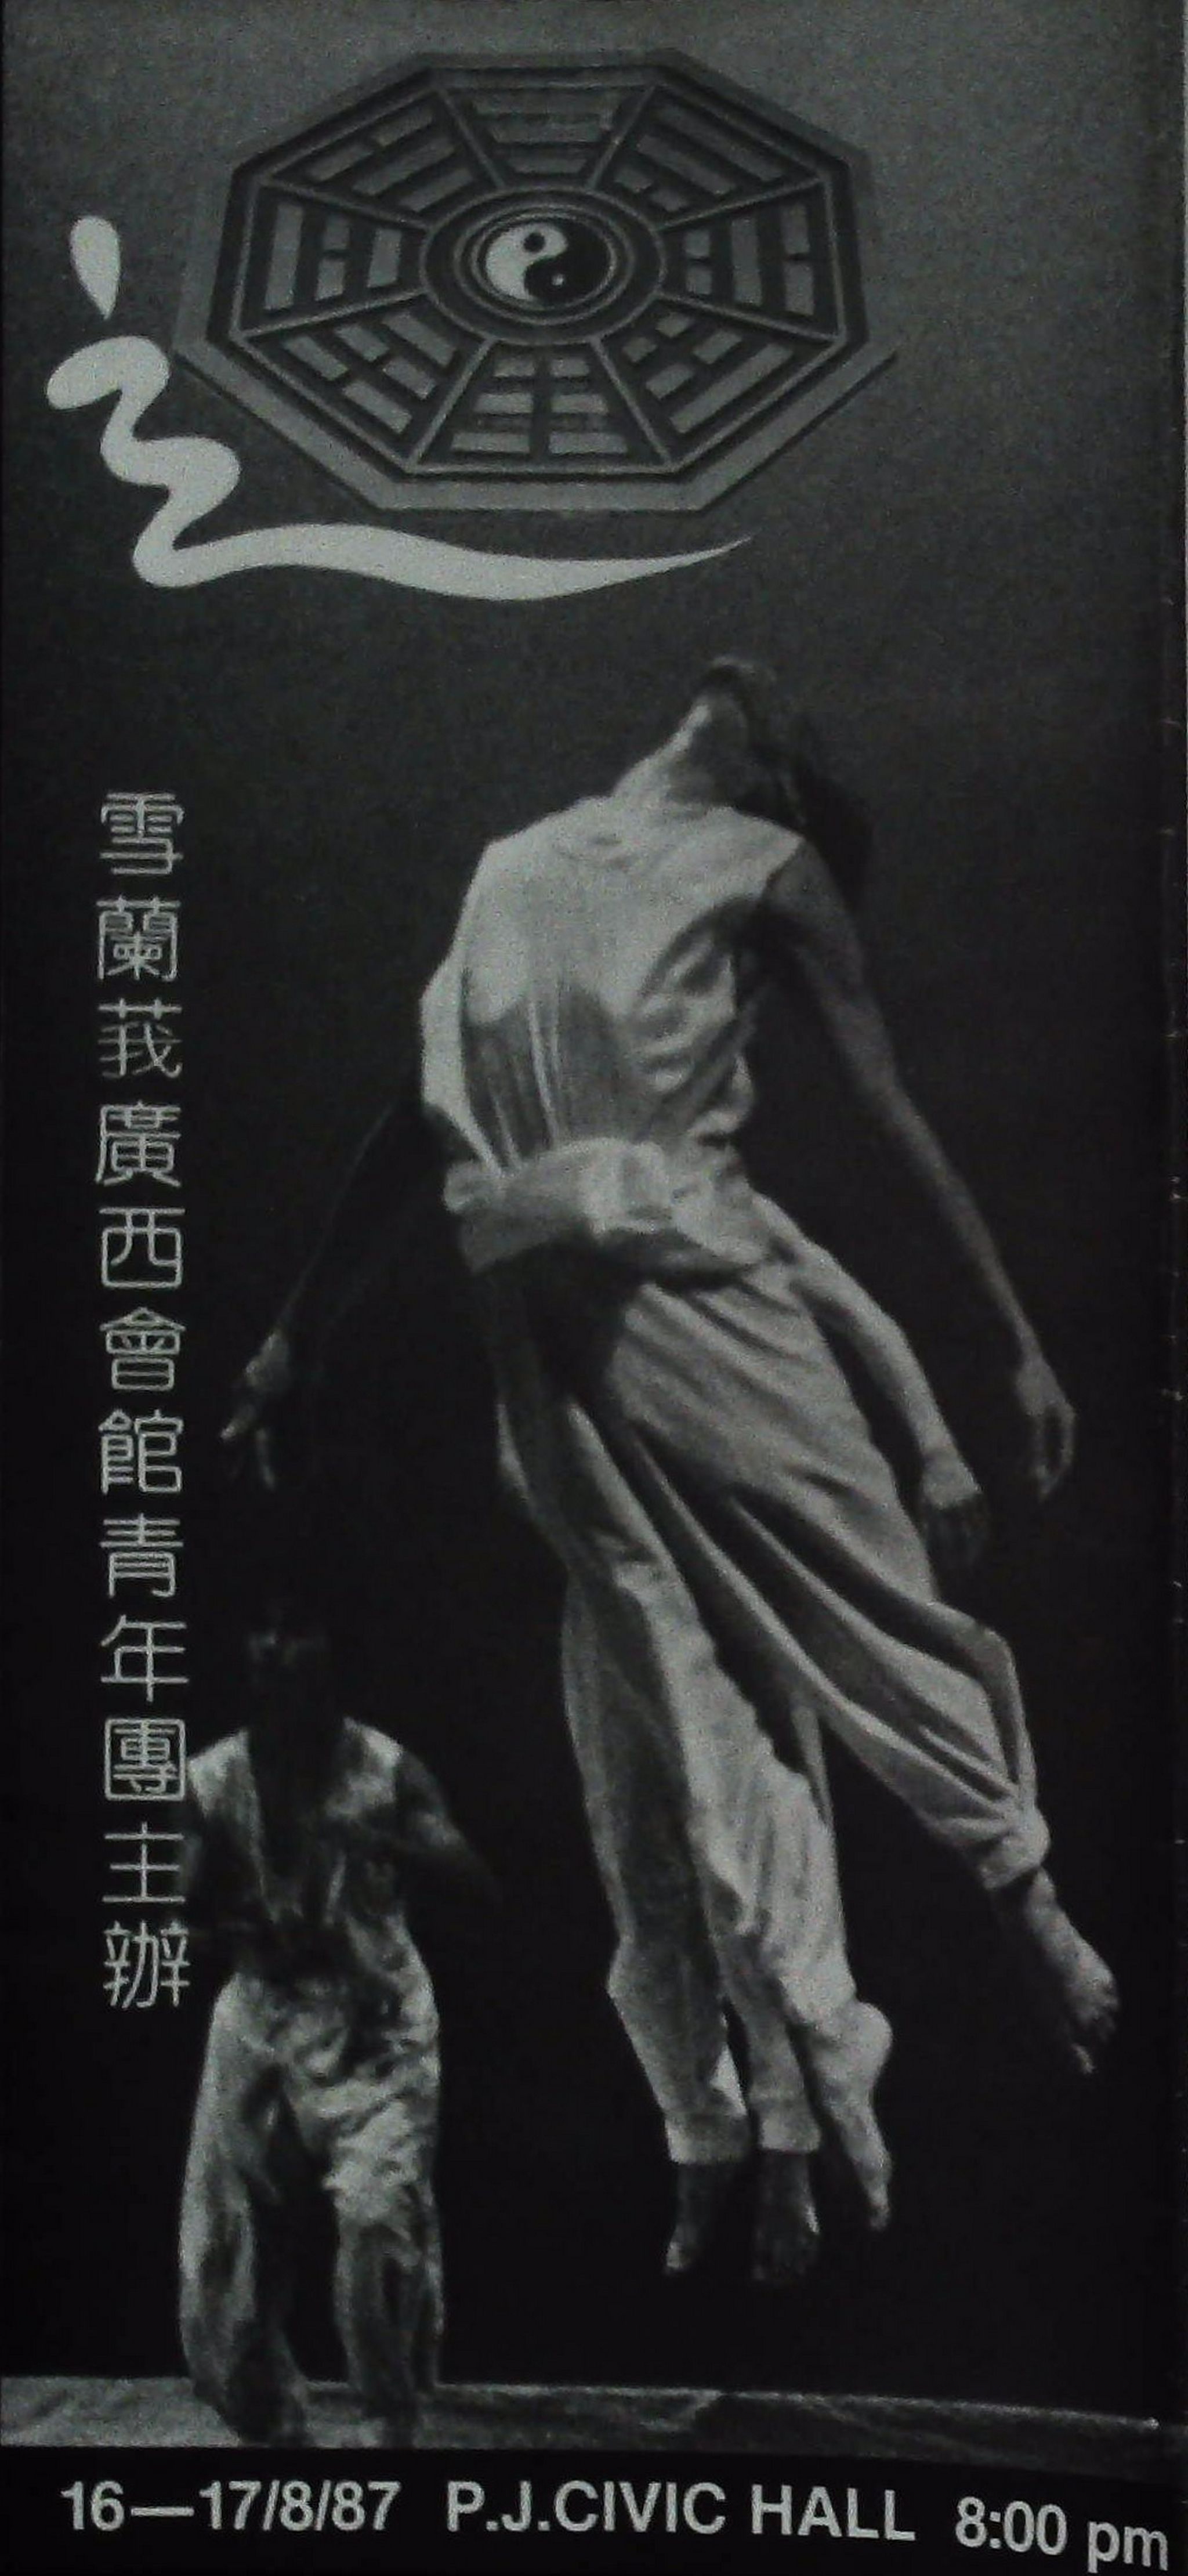 1987 Hui Dance Show Cover